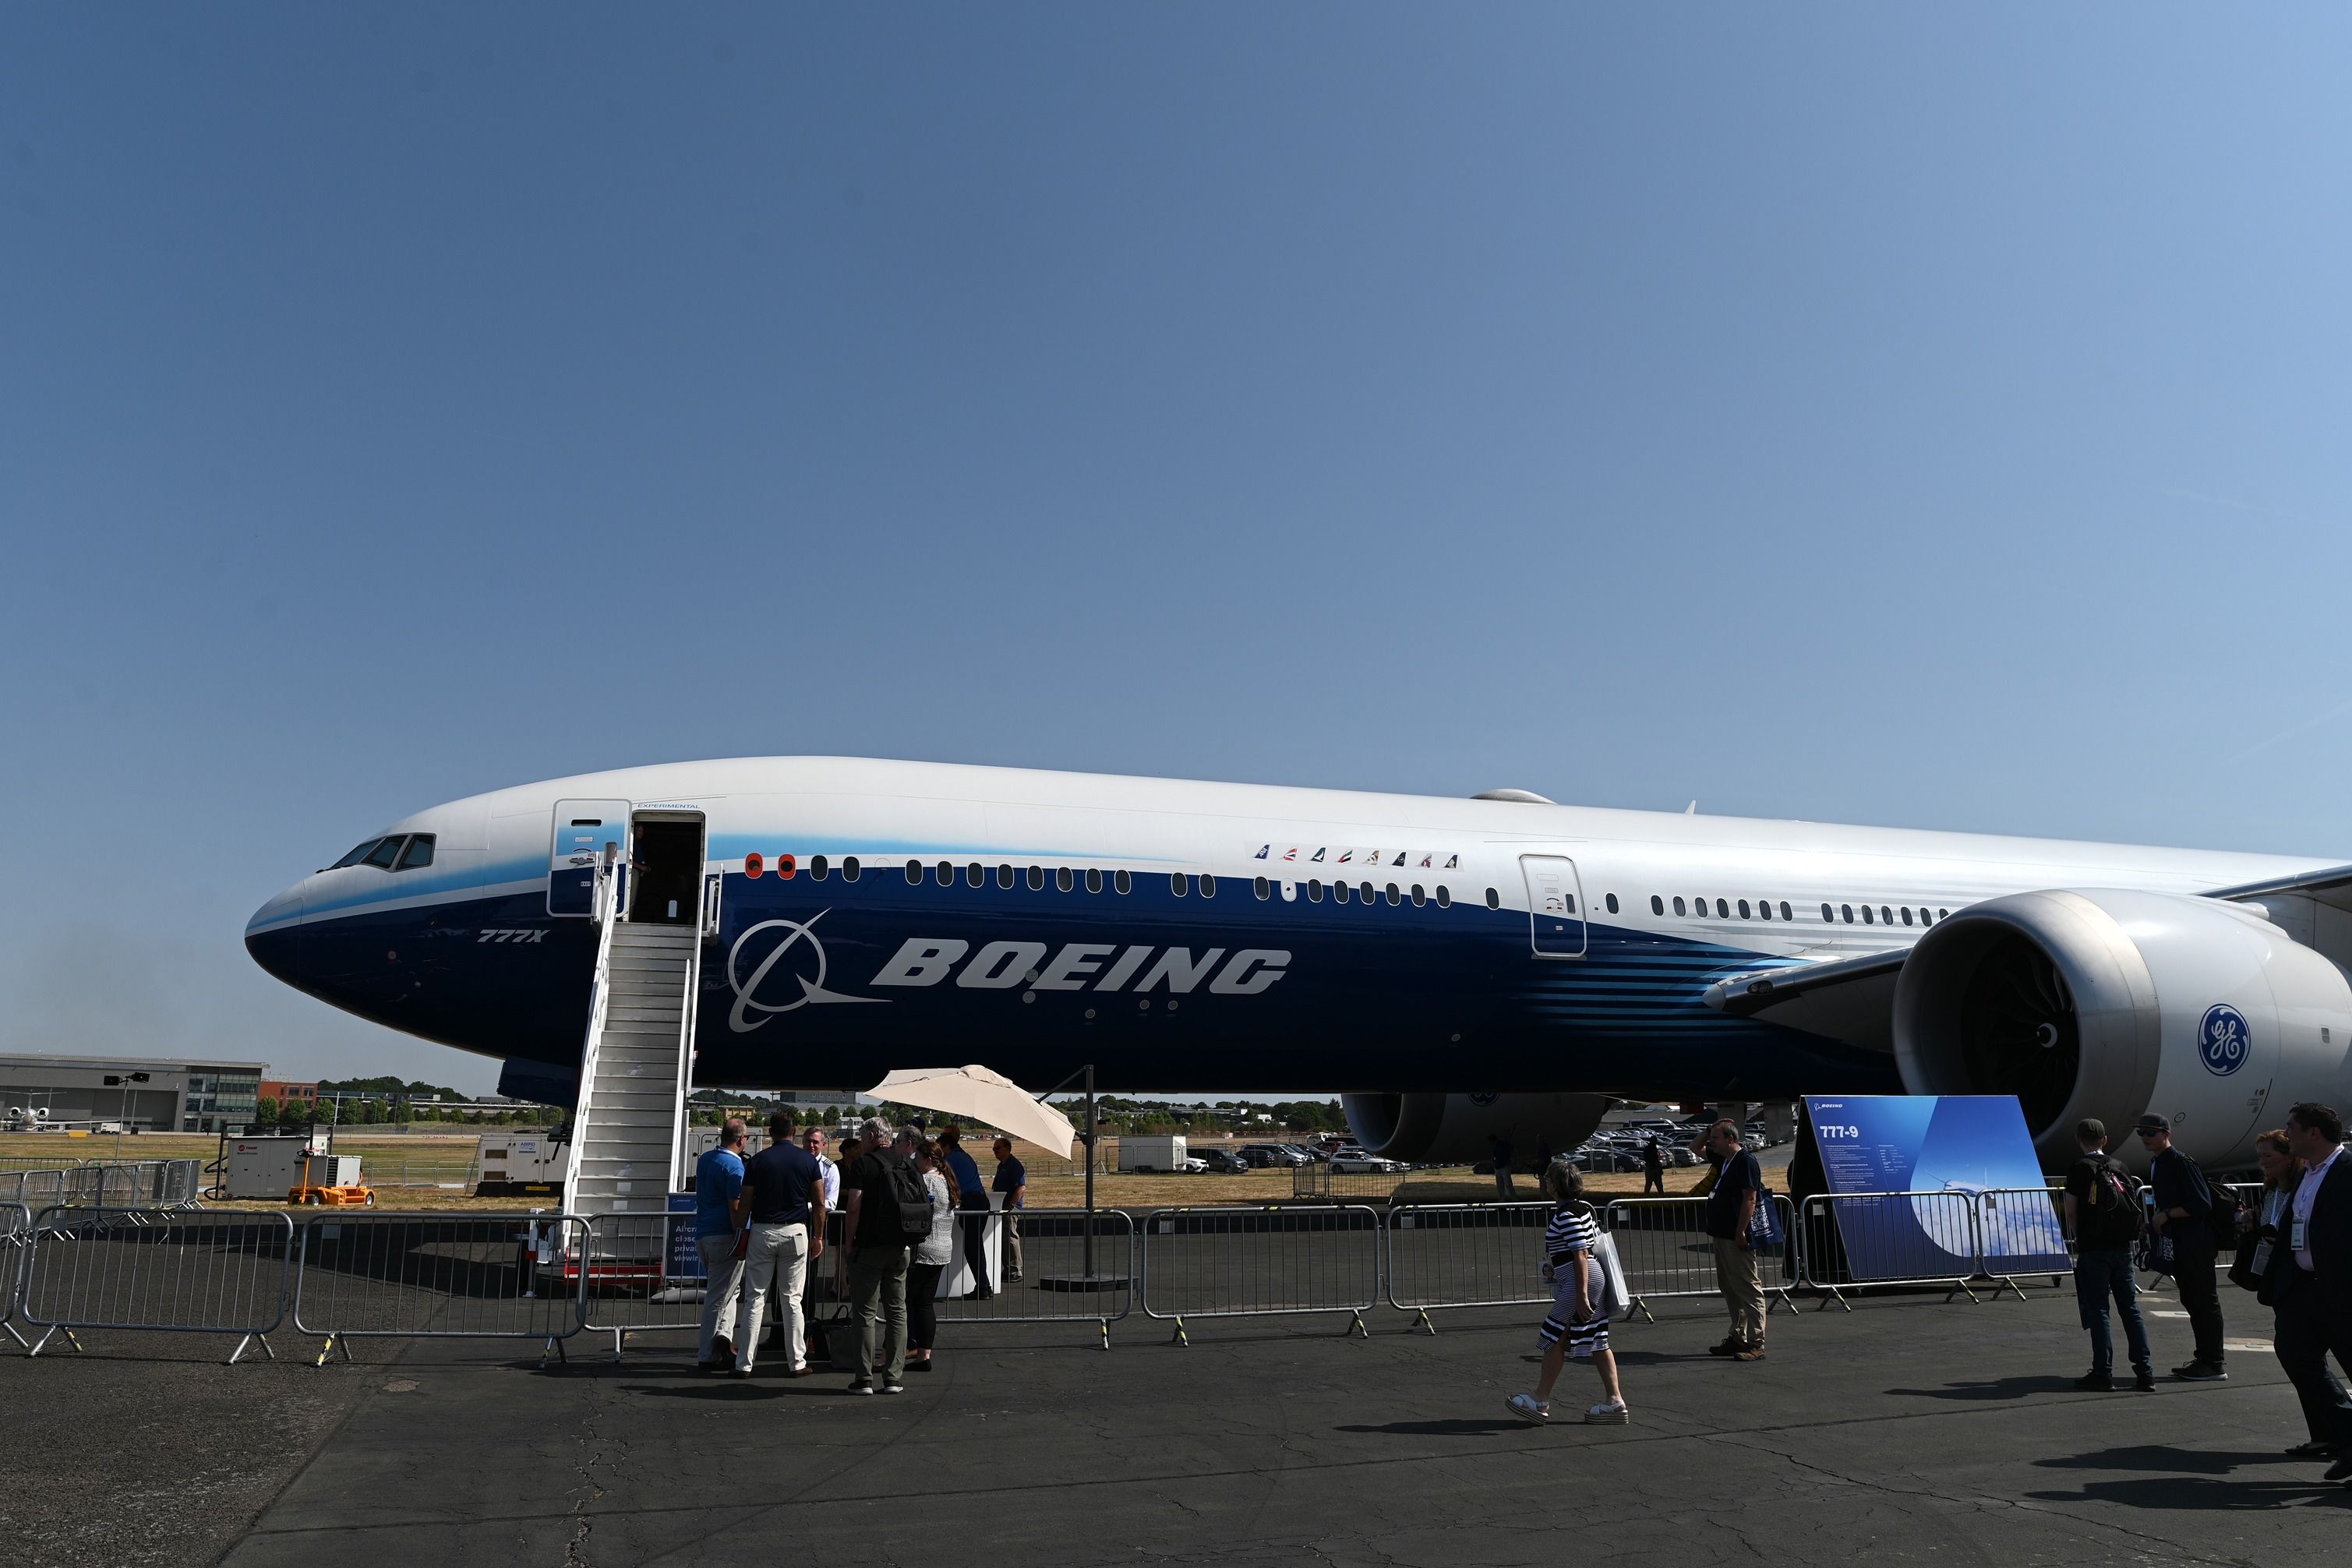 Boeing 777X on display at the Farnborough International Airshow shutterstock_2181164139